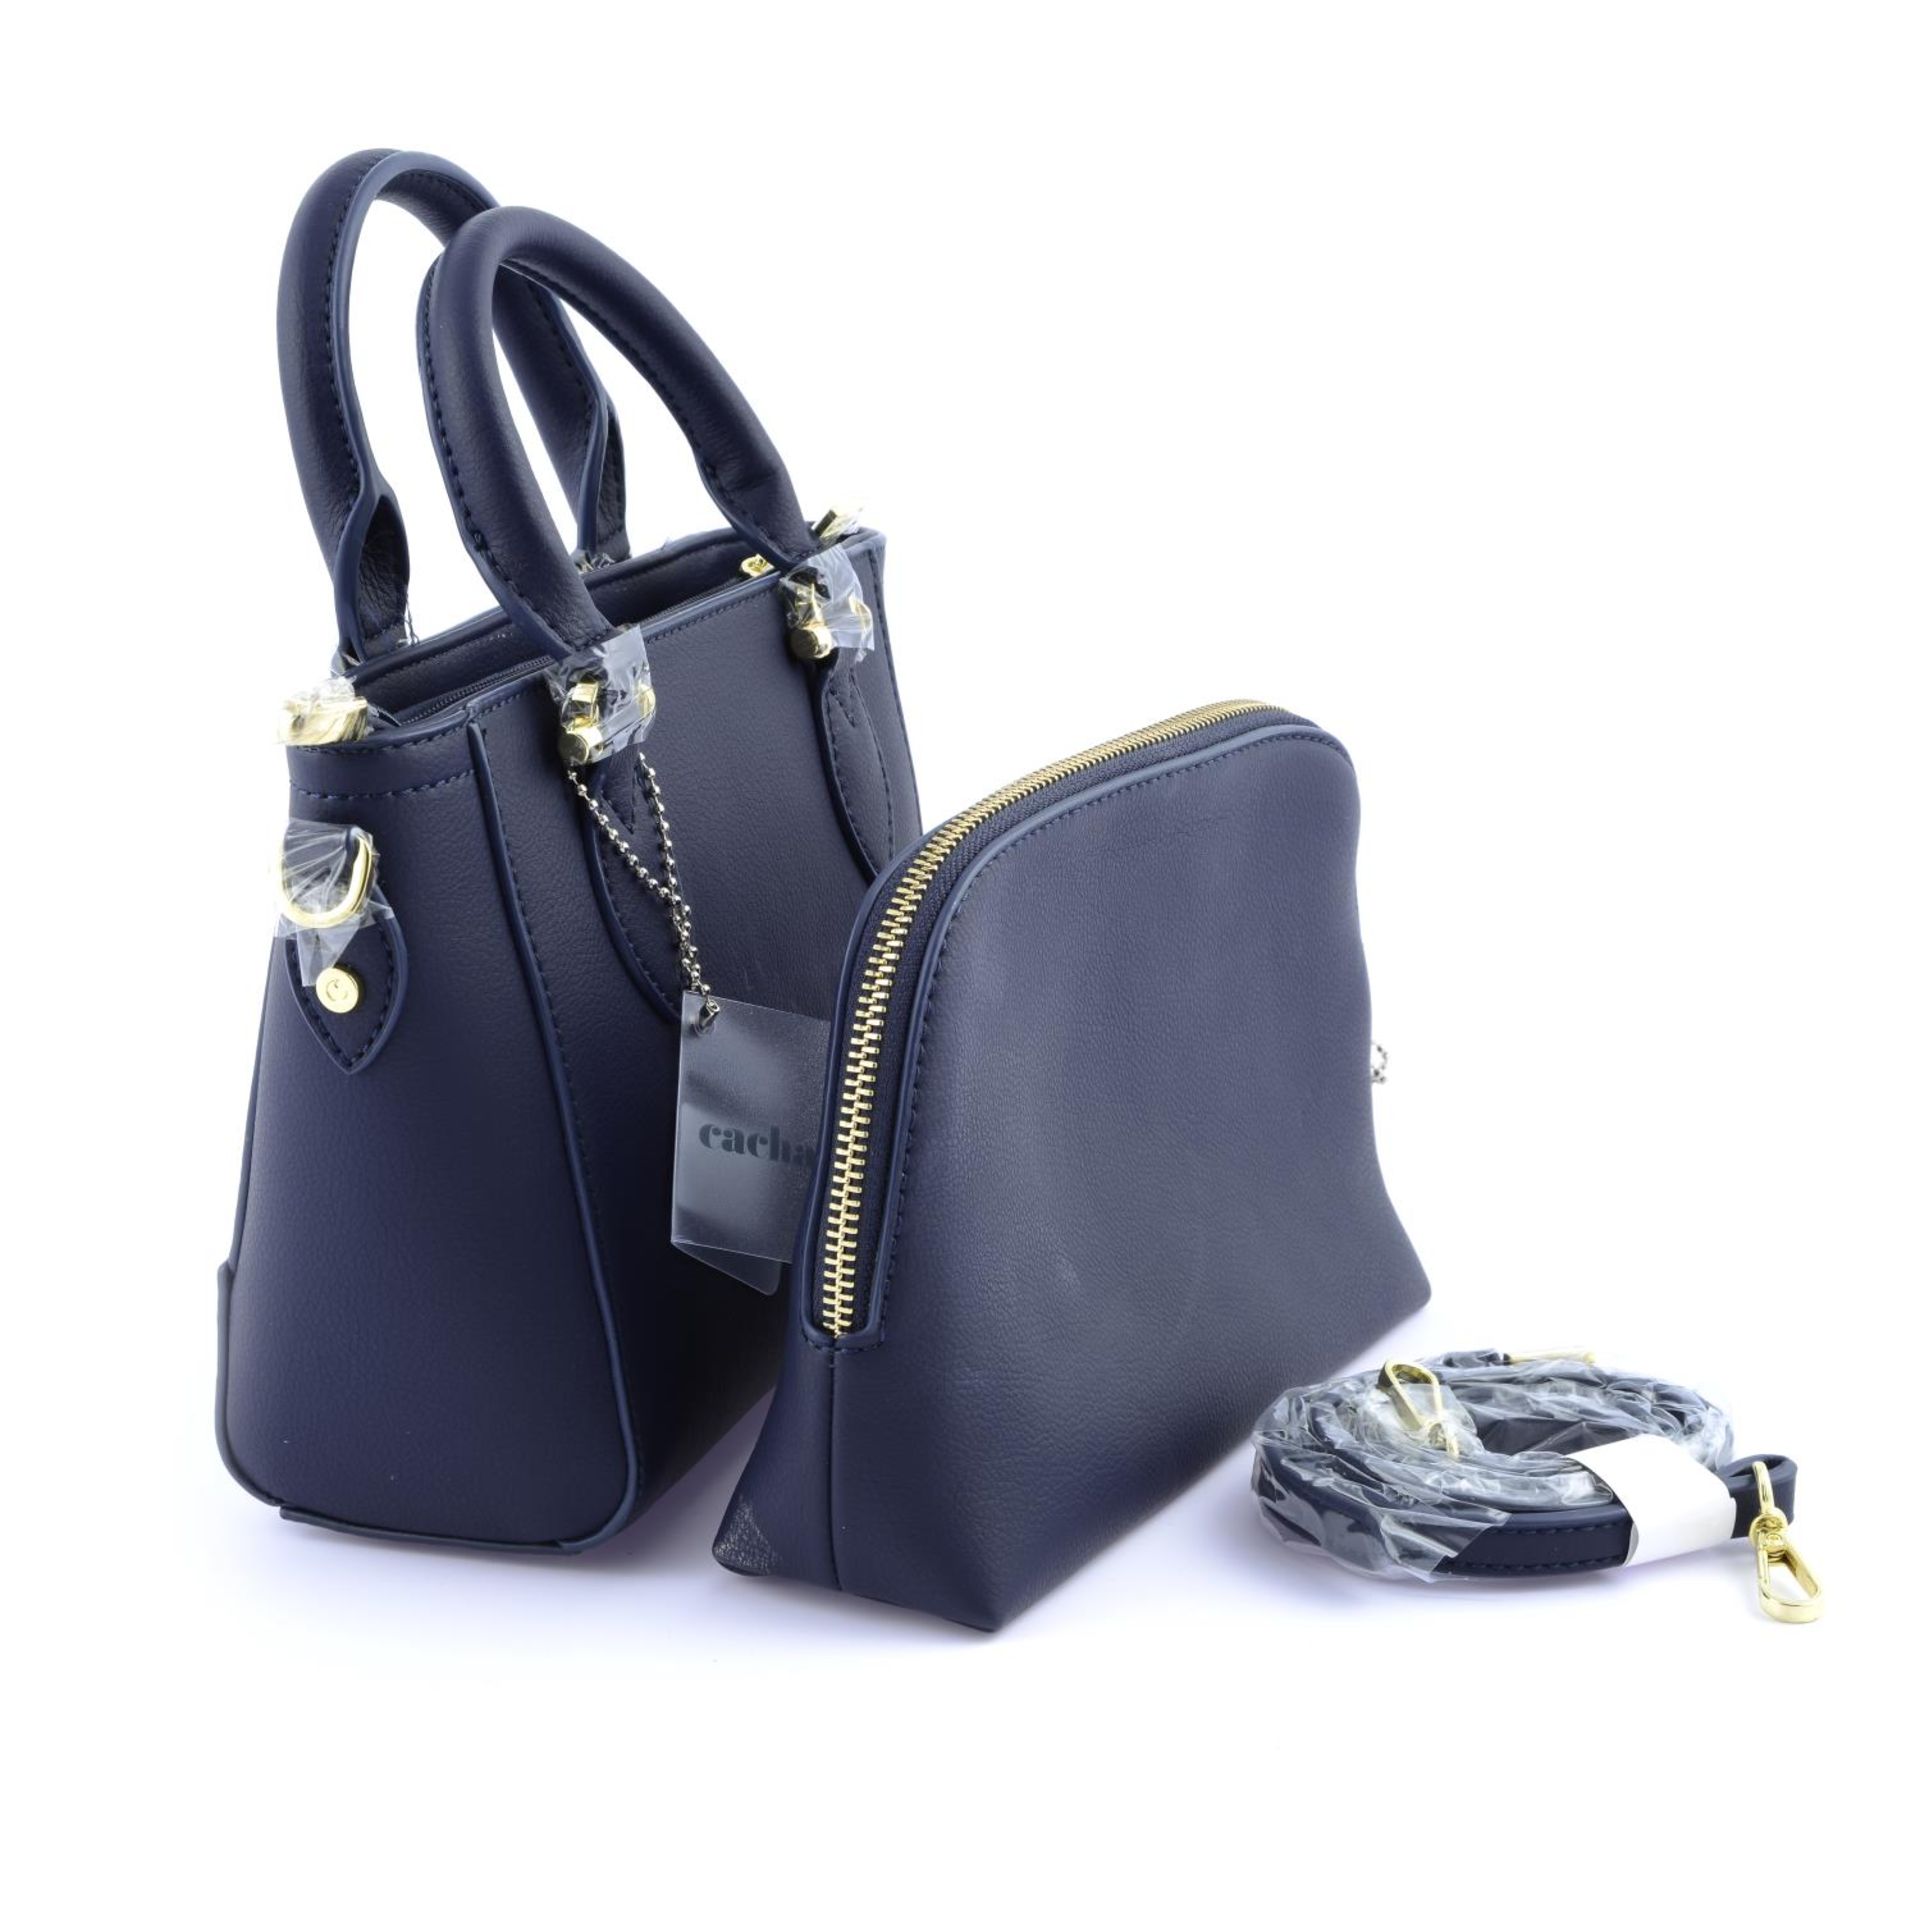 CACHAREL - a small Victoire handbag and cosmetics case. - Bild 3 aus 4